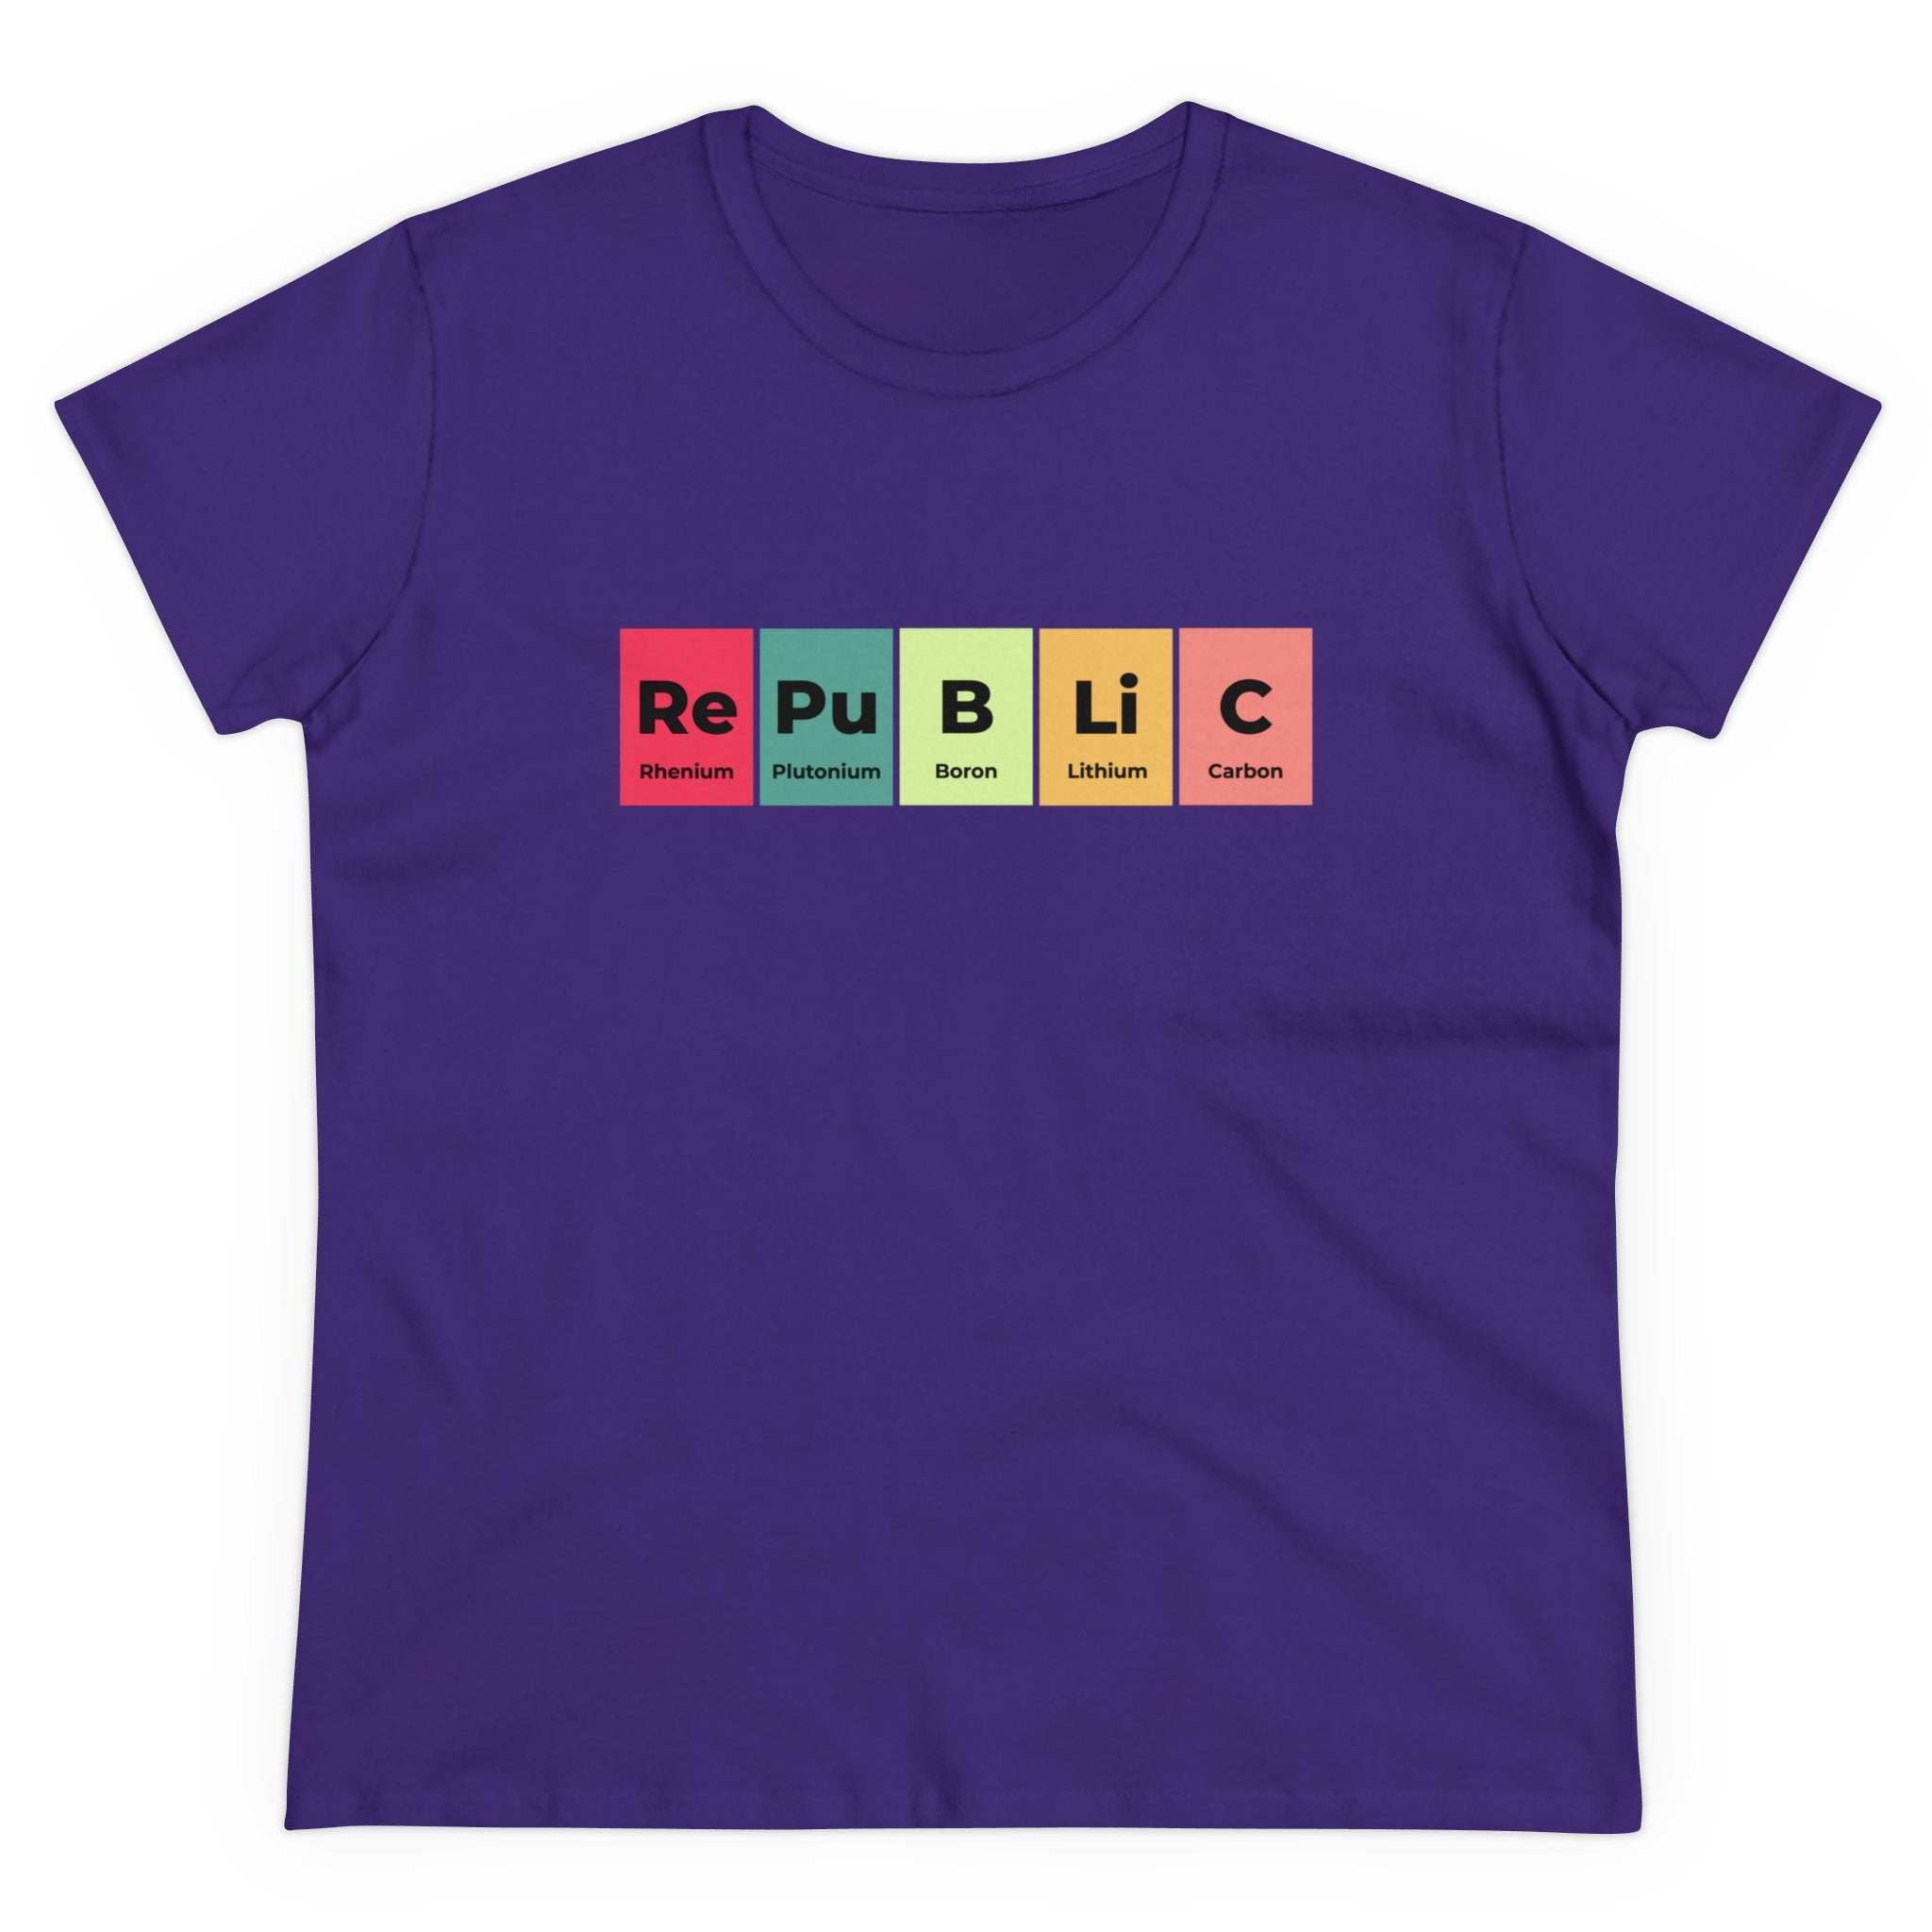 This comfy Republic - Women's Tee in purple features the word "Republic" using colorful boxes with chemical symbol-style lettering: R (Rhenium), e (Plutonium), P (Phosphorus), u (Uranium), B (Boron), L (Lithium), i (Lithium), C (Carbon). Made from ethically grown US cotton.